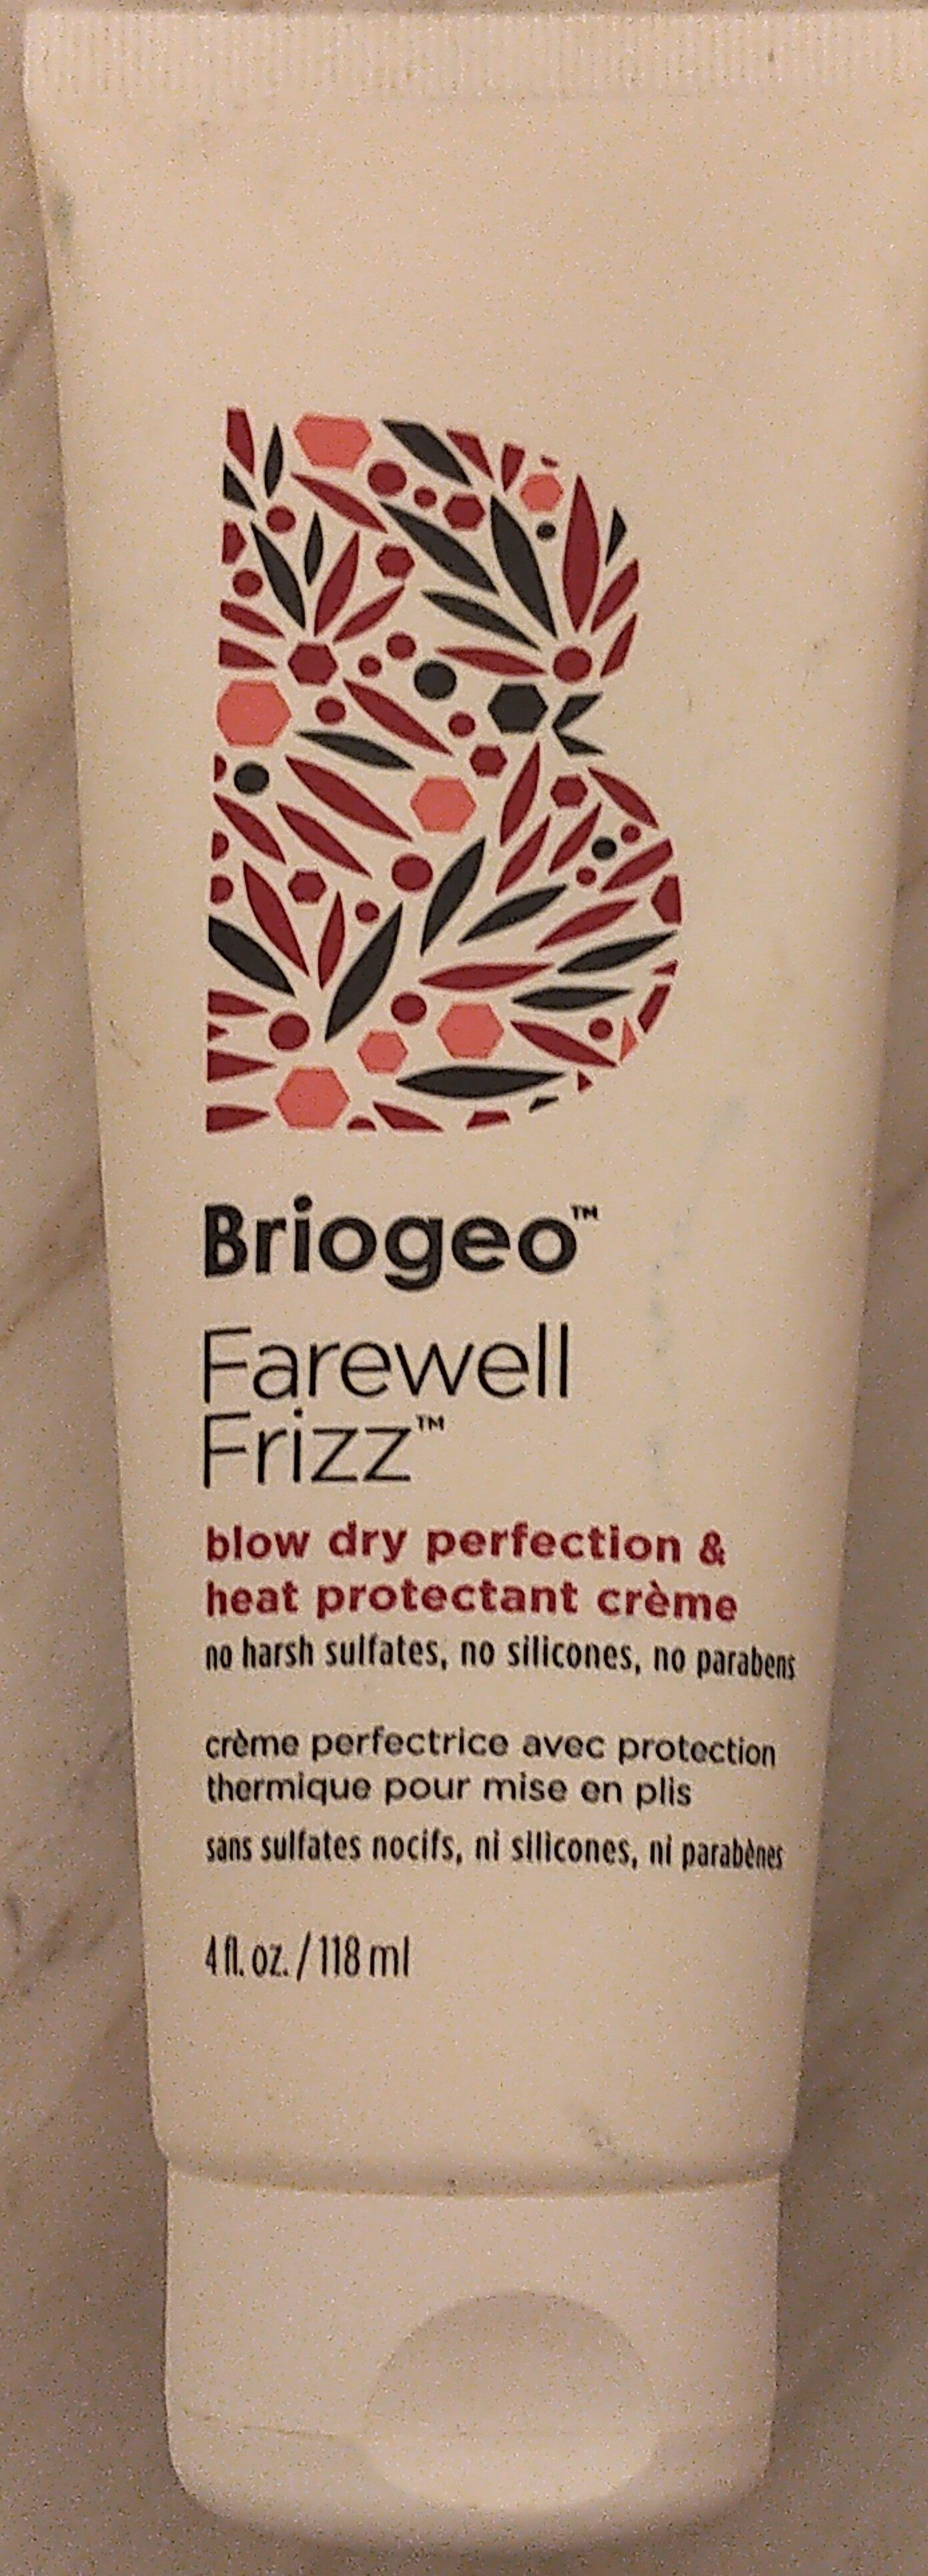 Briogeo Farewell Frizz Blow Dry Perfection & Heat Protectant Crème - 製品 - en